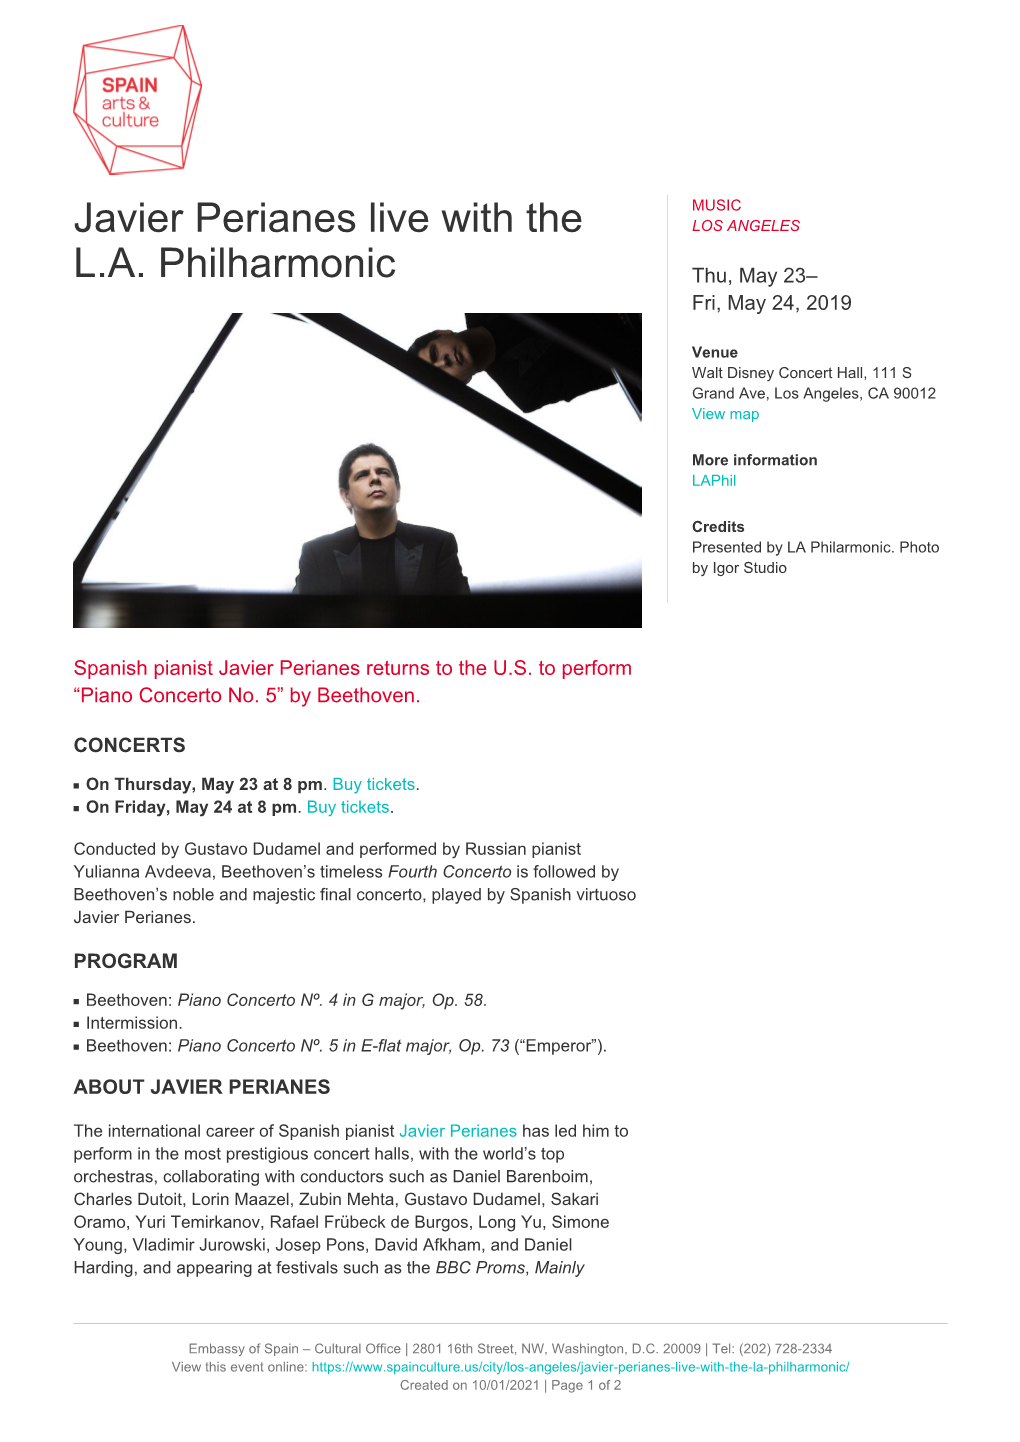 Javier Perianes Live with the LA Philharmonic